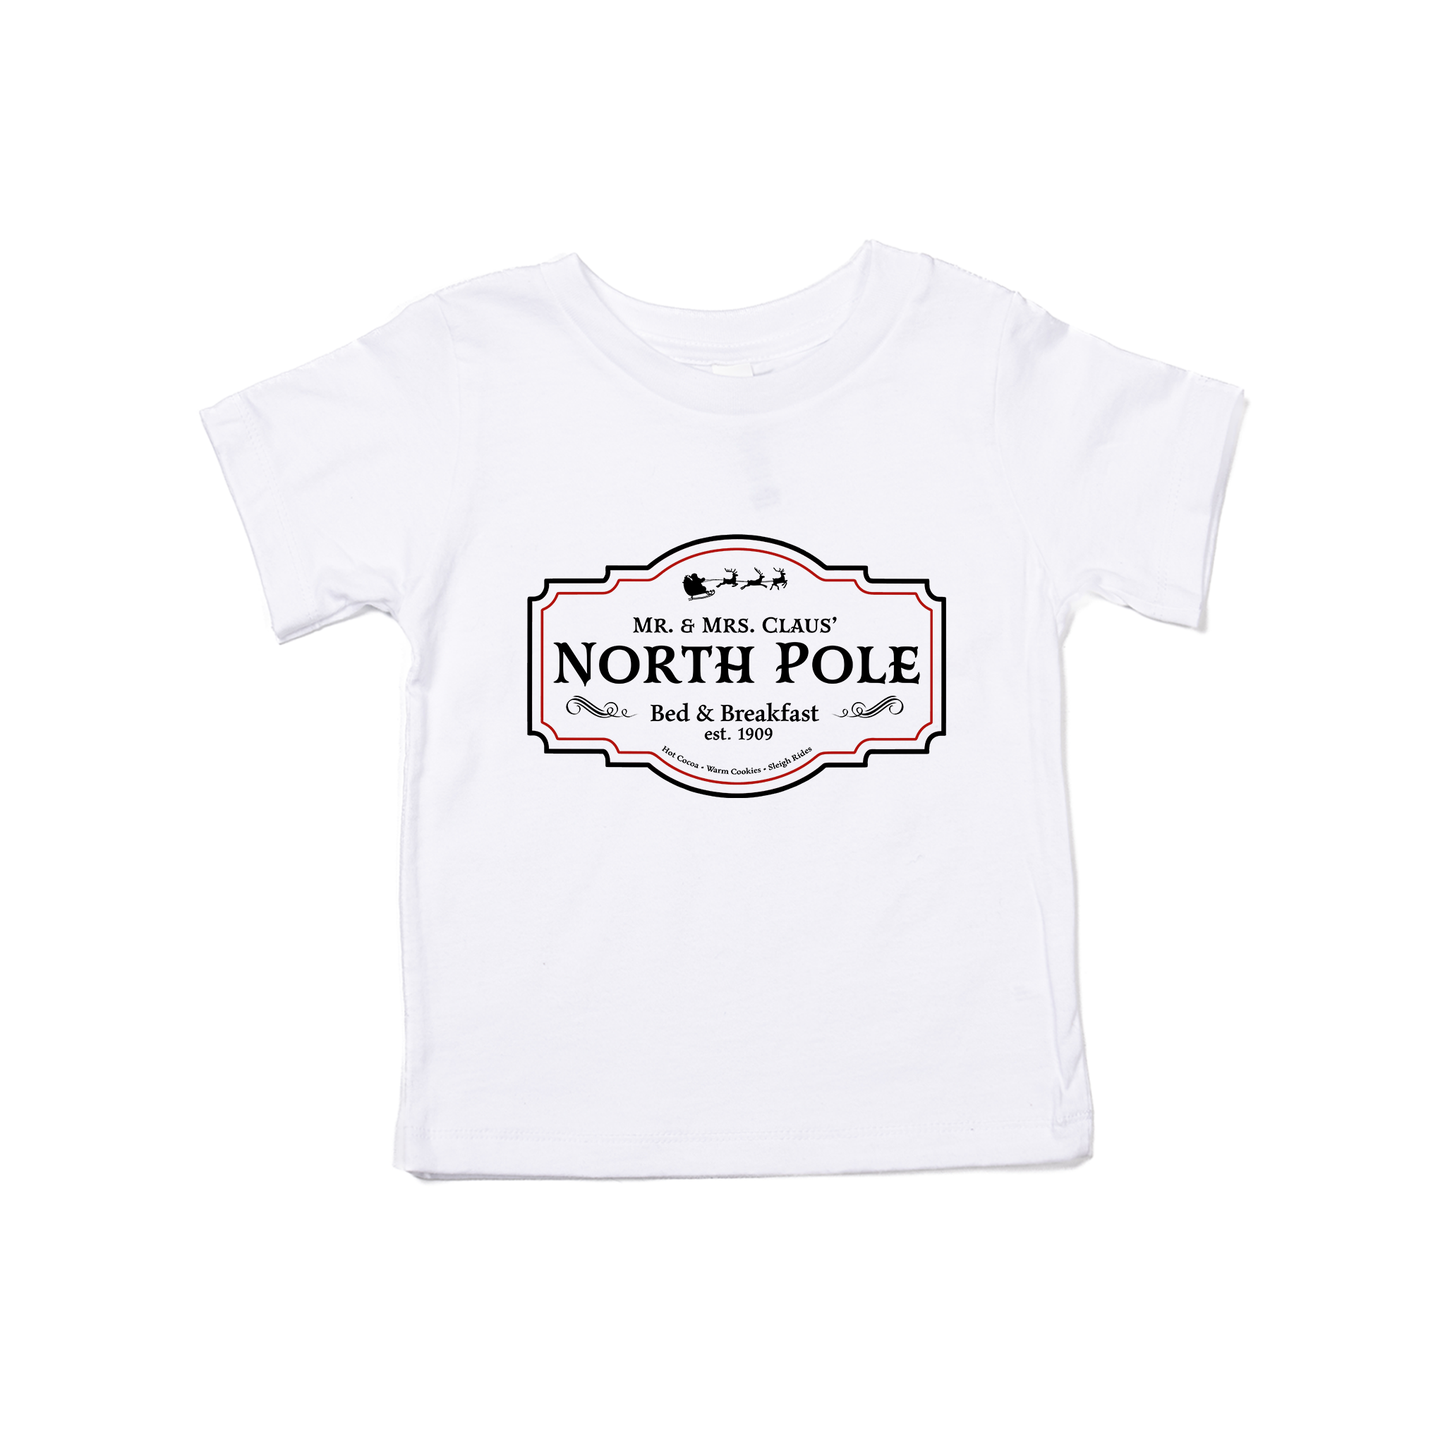 North Pole Bed & Breakfast - Kids Tee (White)